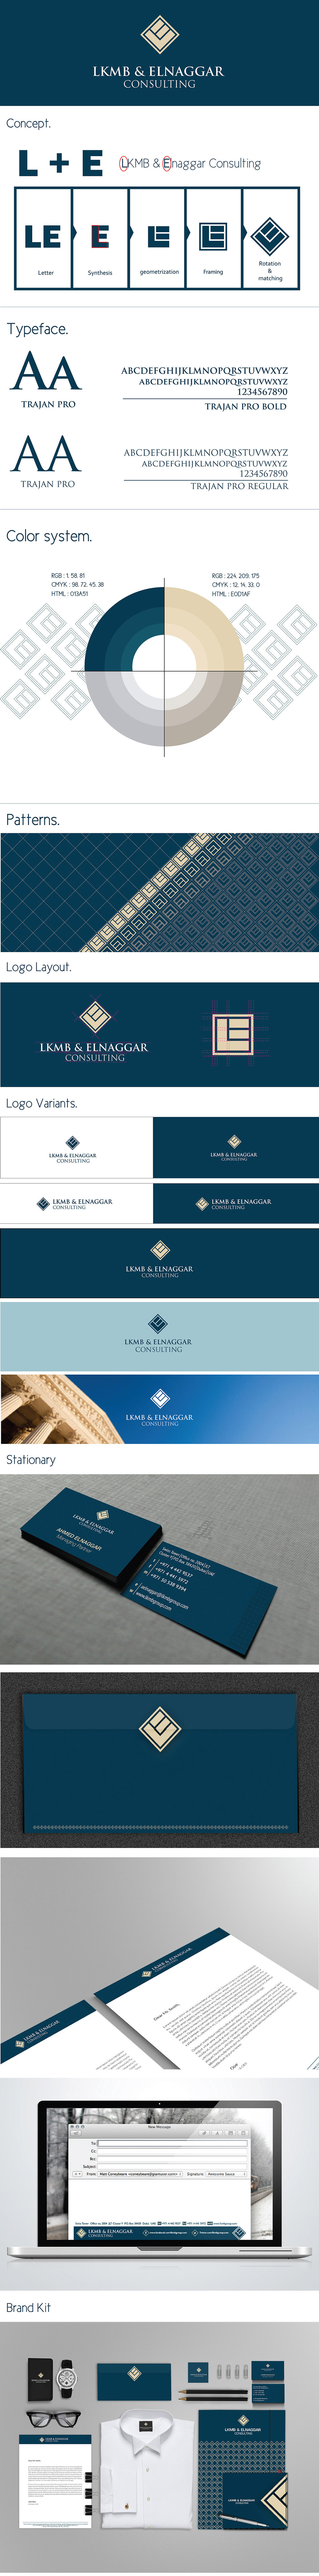 Law corporate identity Consultancy Corporate Identity Law Firm Branding law consulting branding